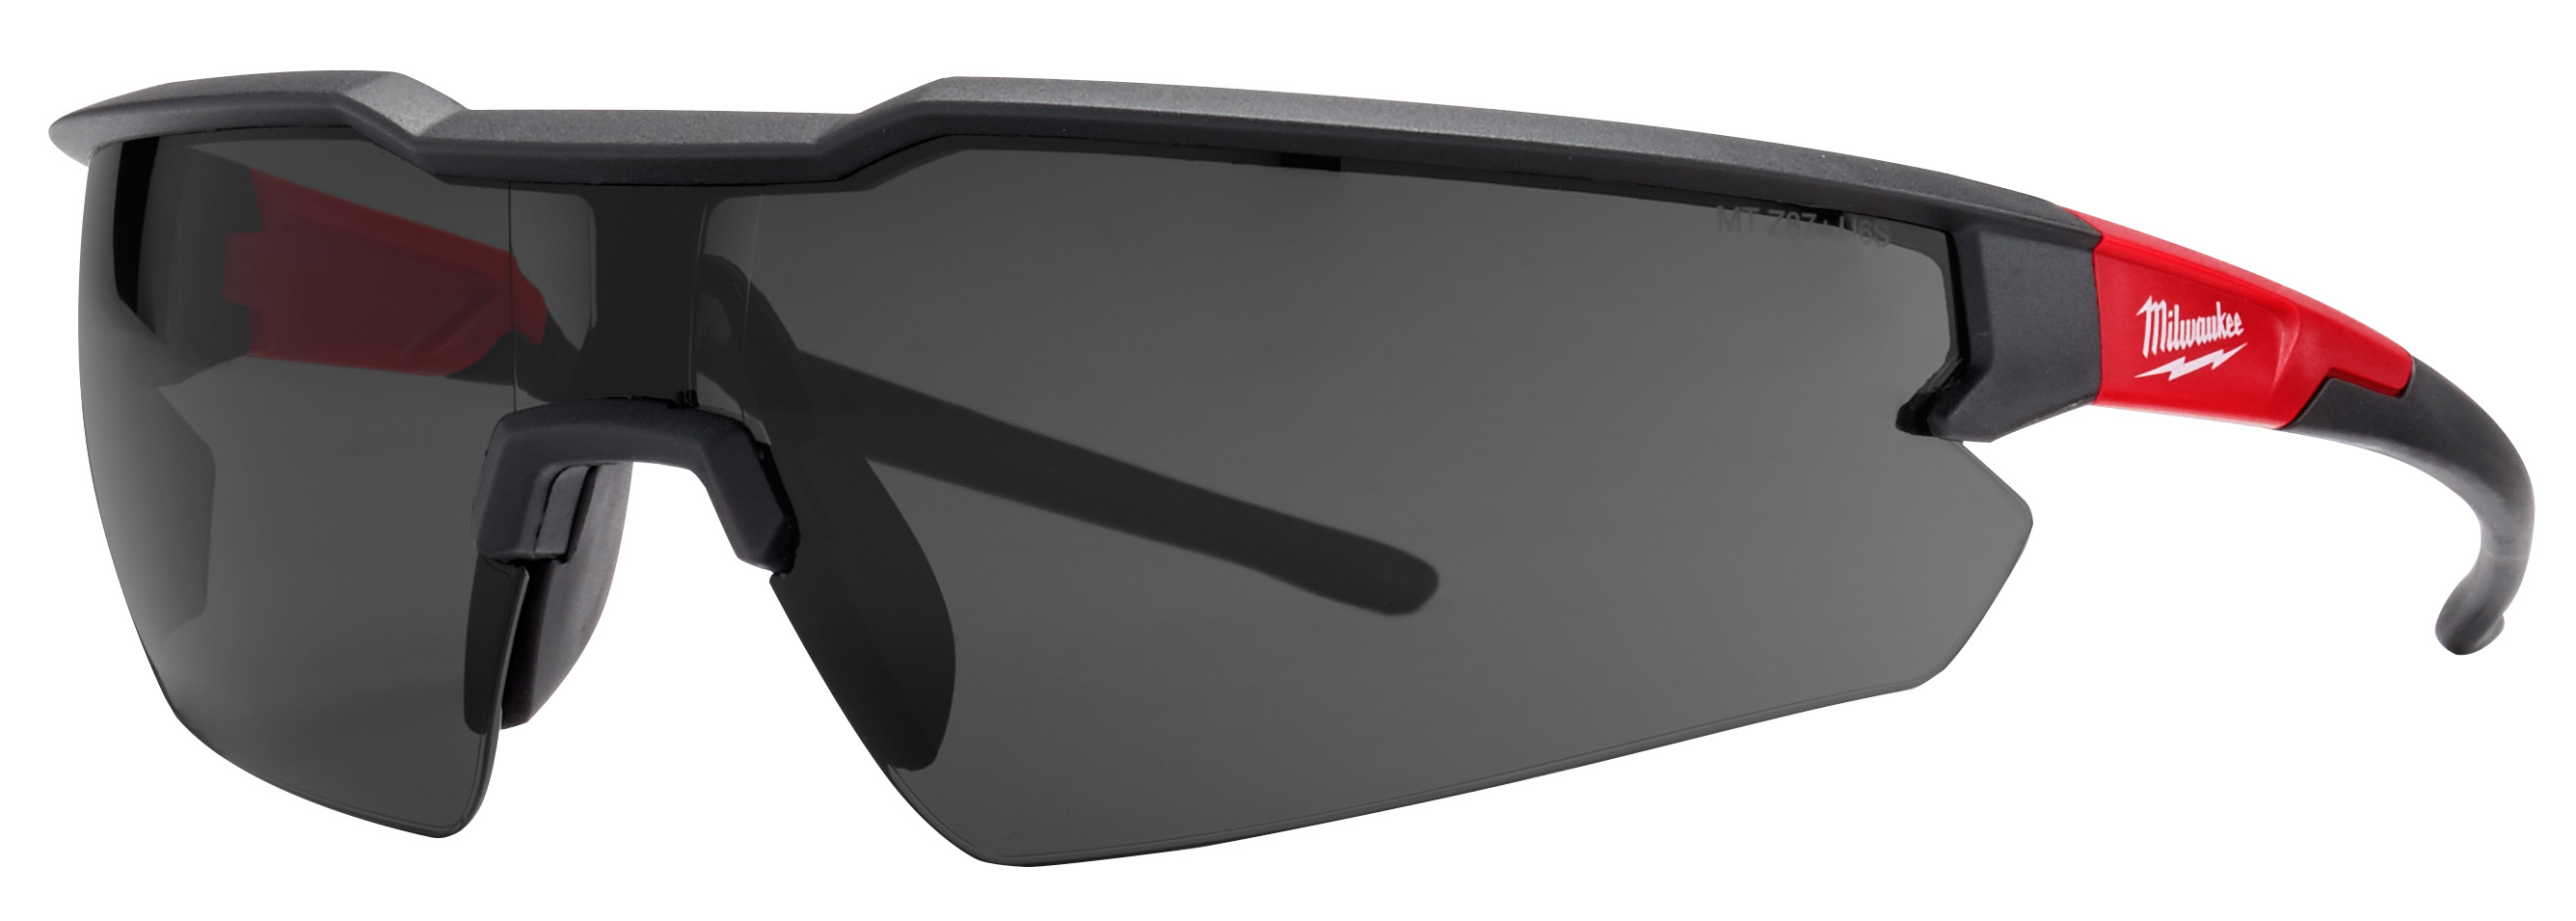 48732005 - Safety Glasses - Anti-Fog - Milwaukee®